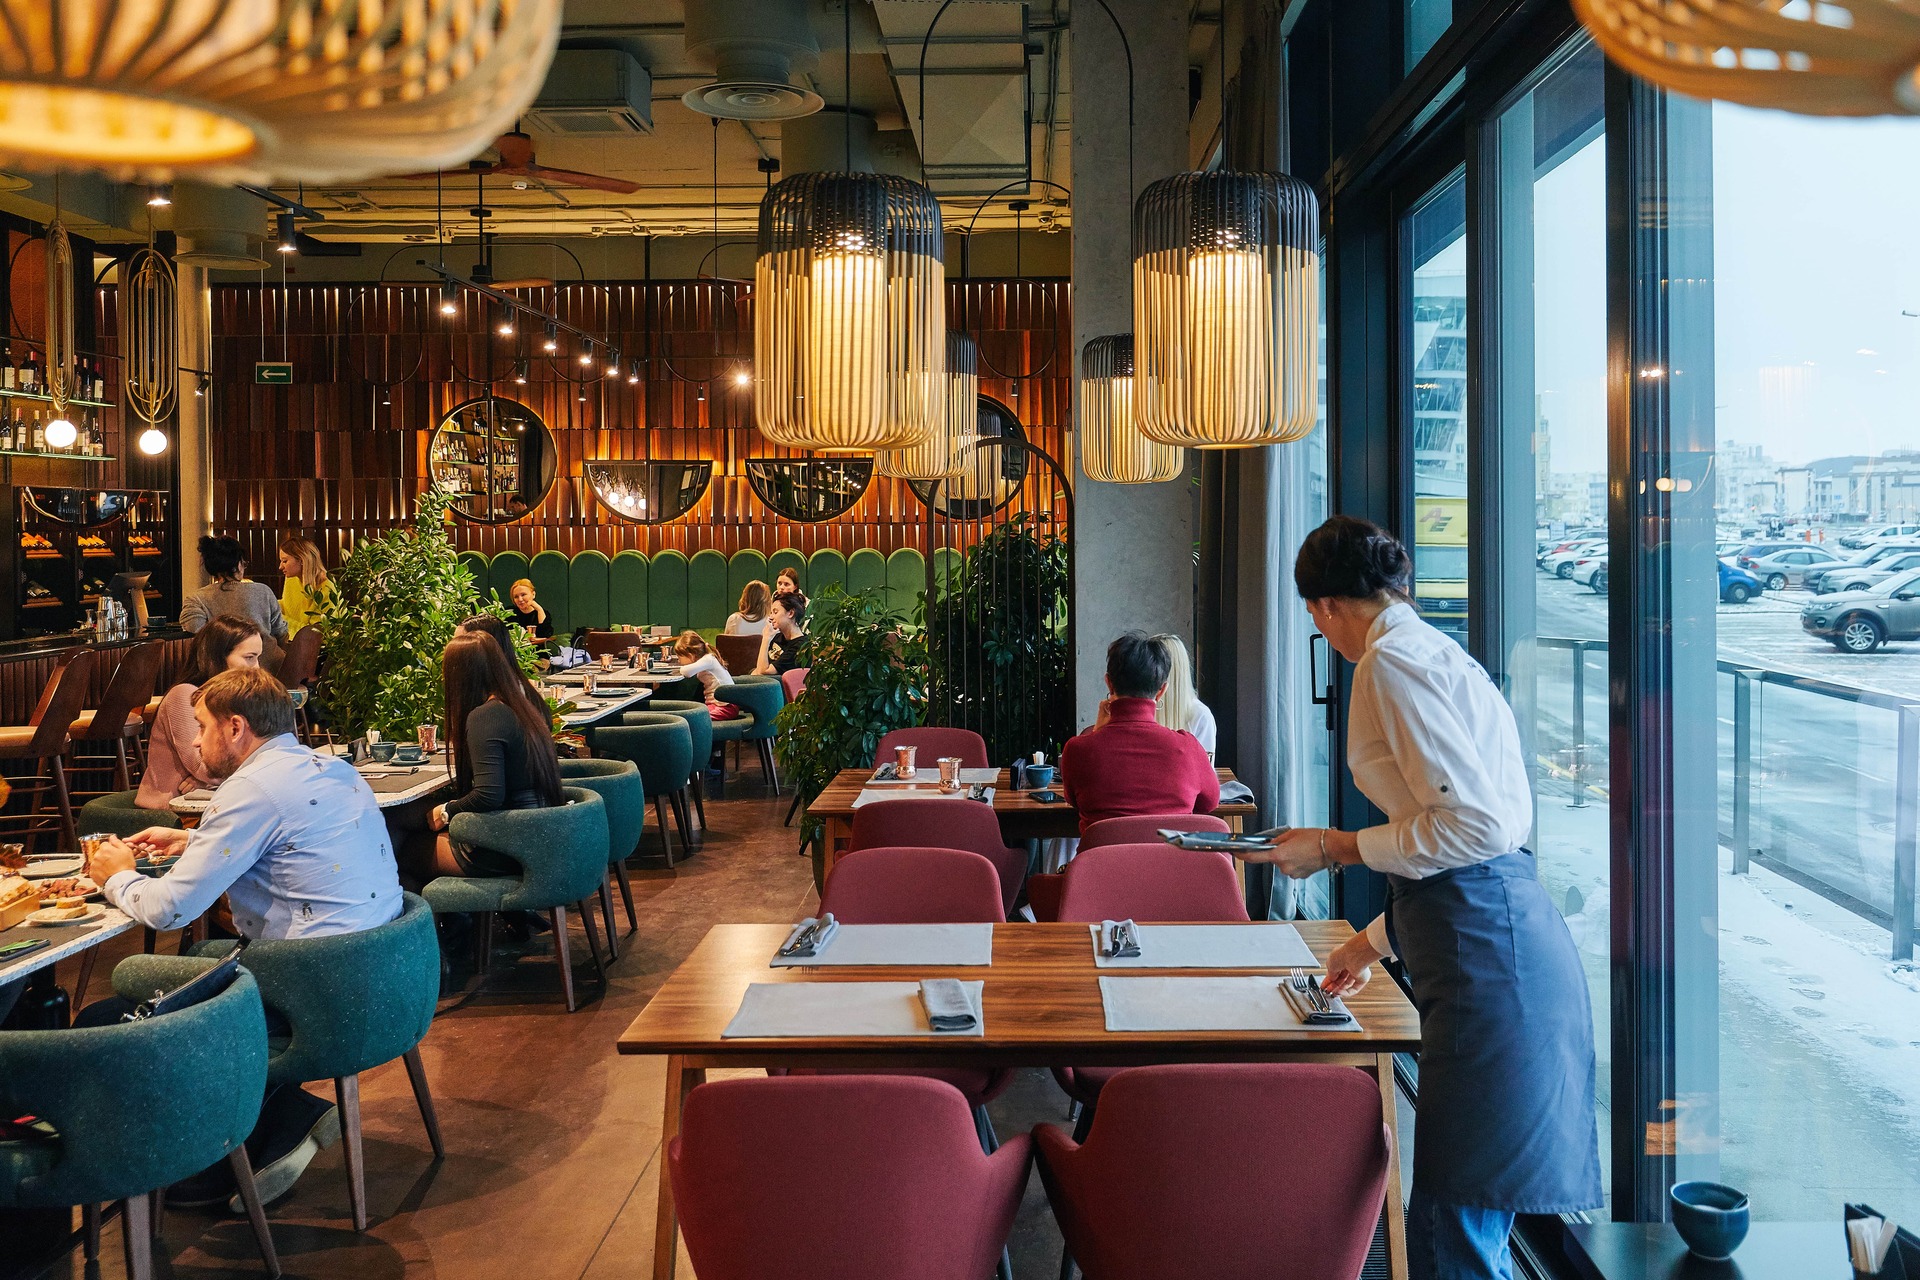 How to open restaurant in Dubai?